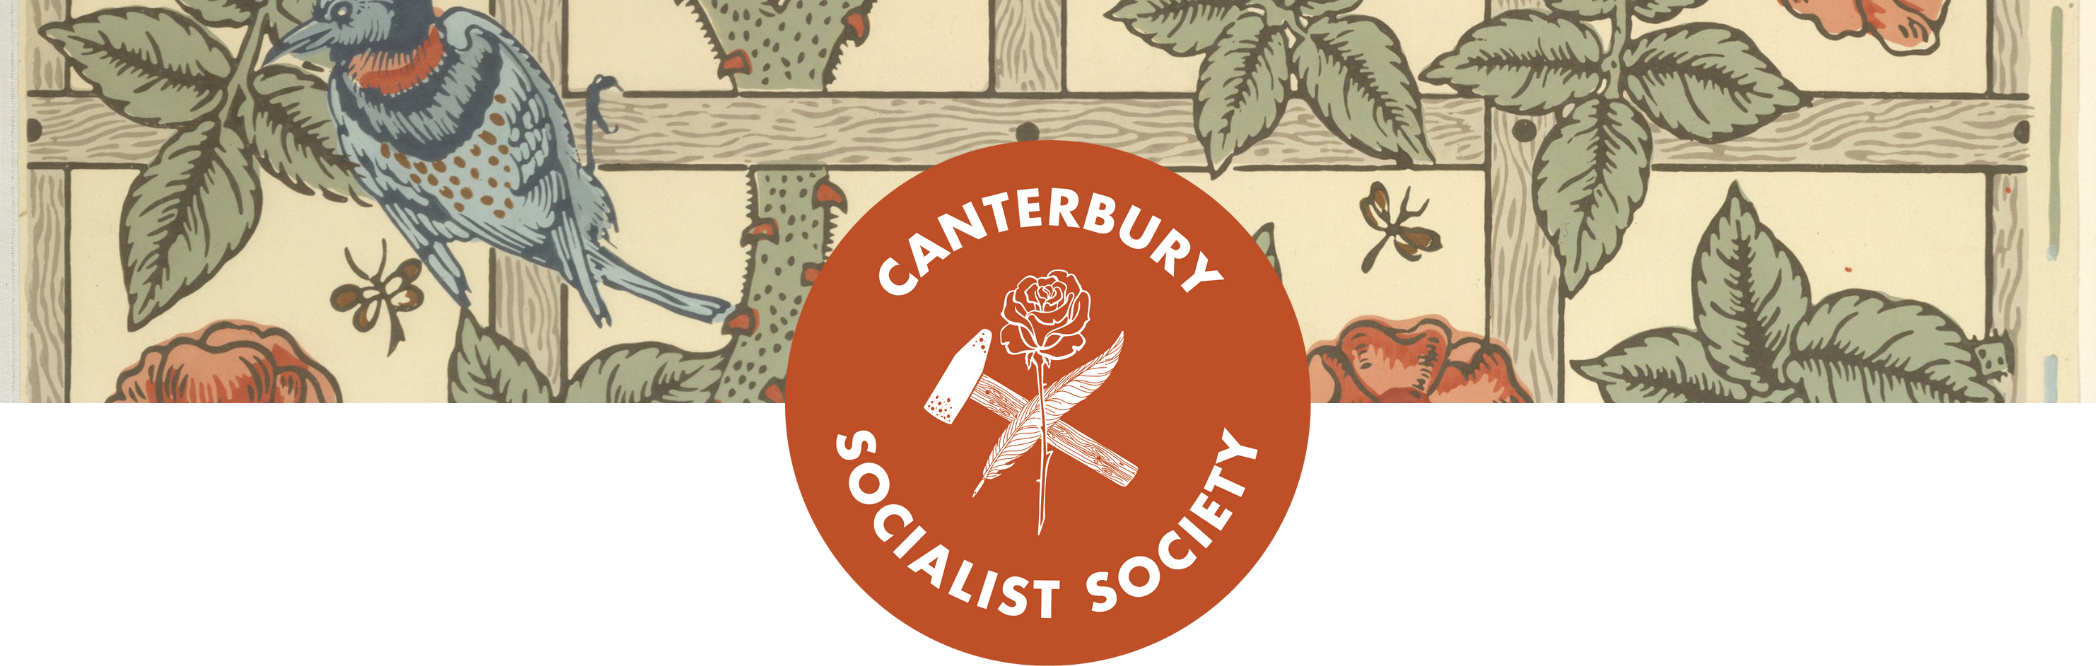 Federation of Socialist Societies